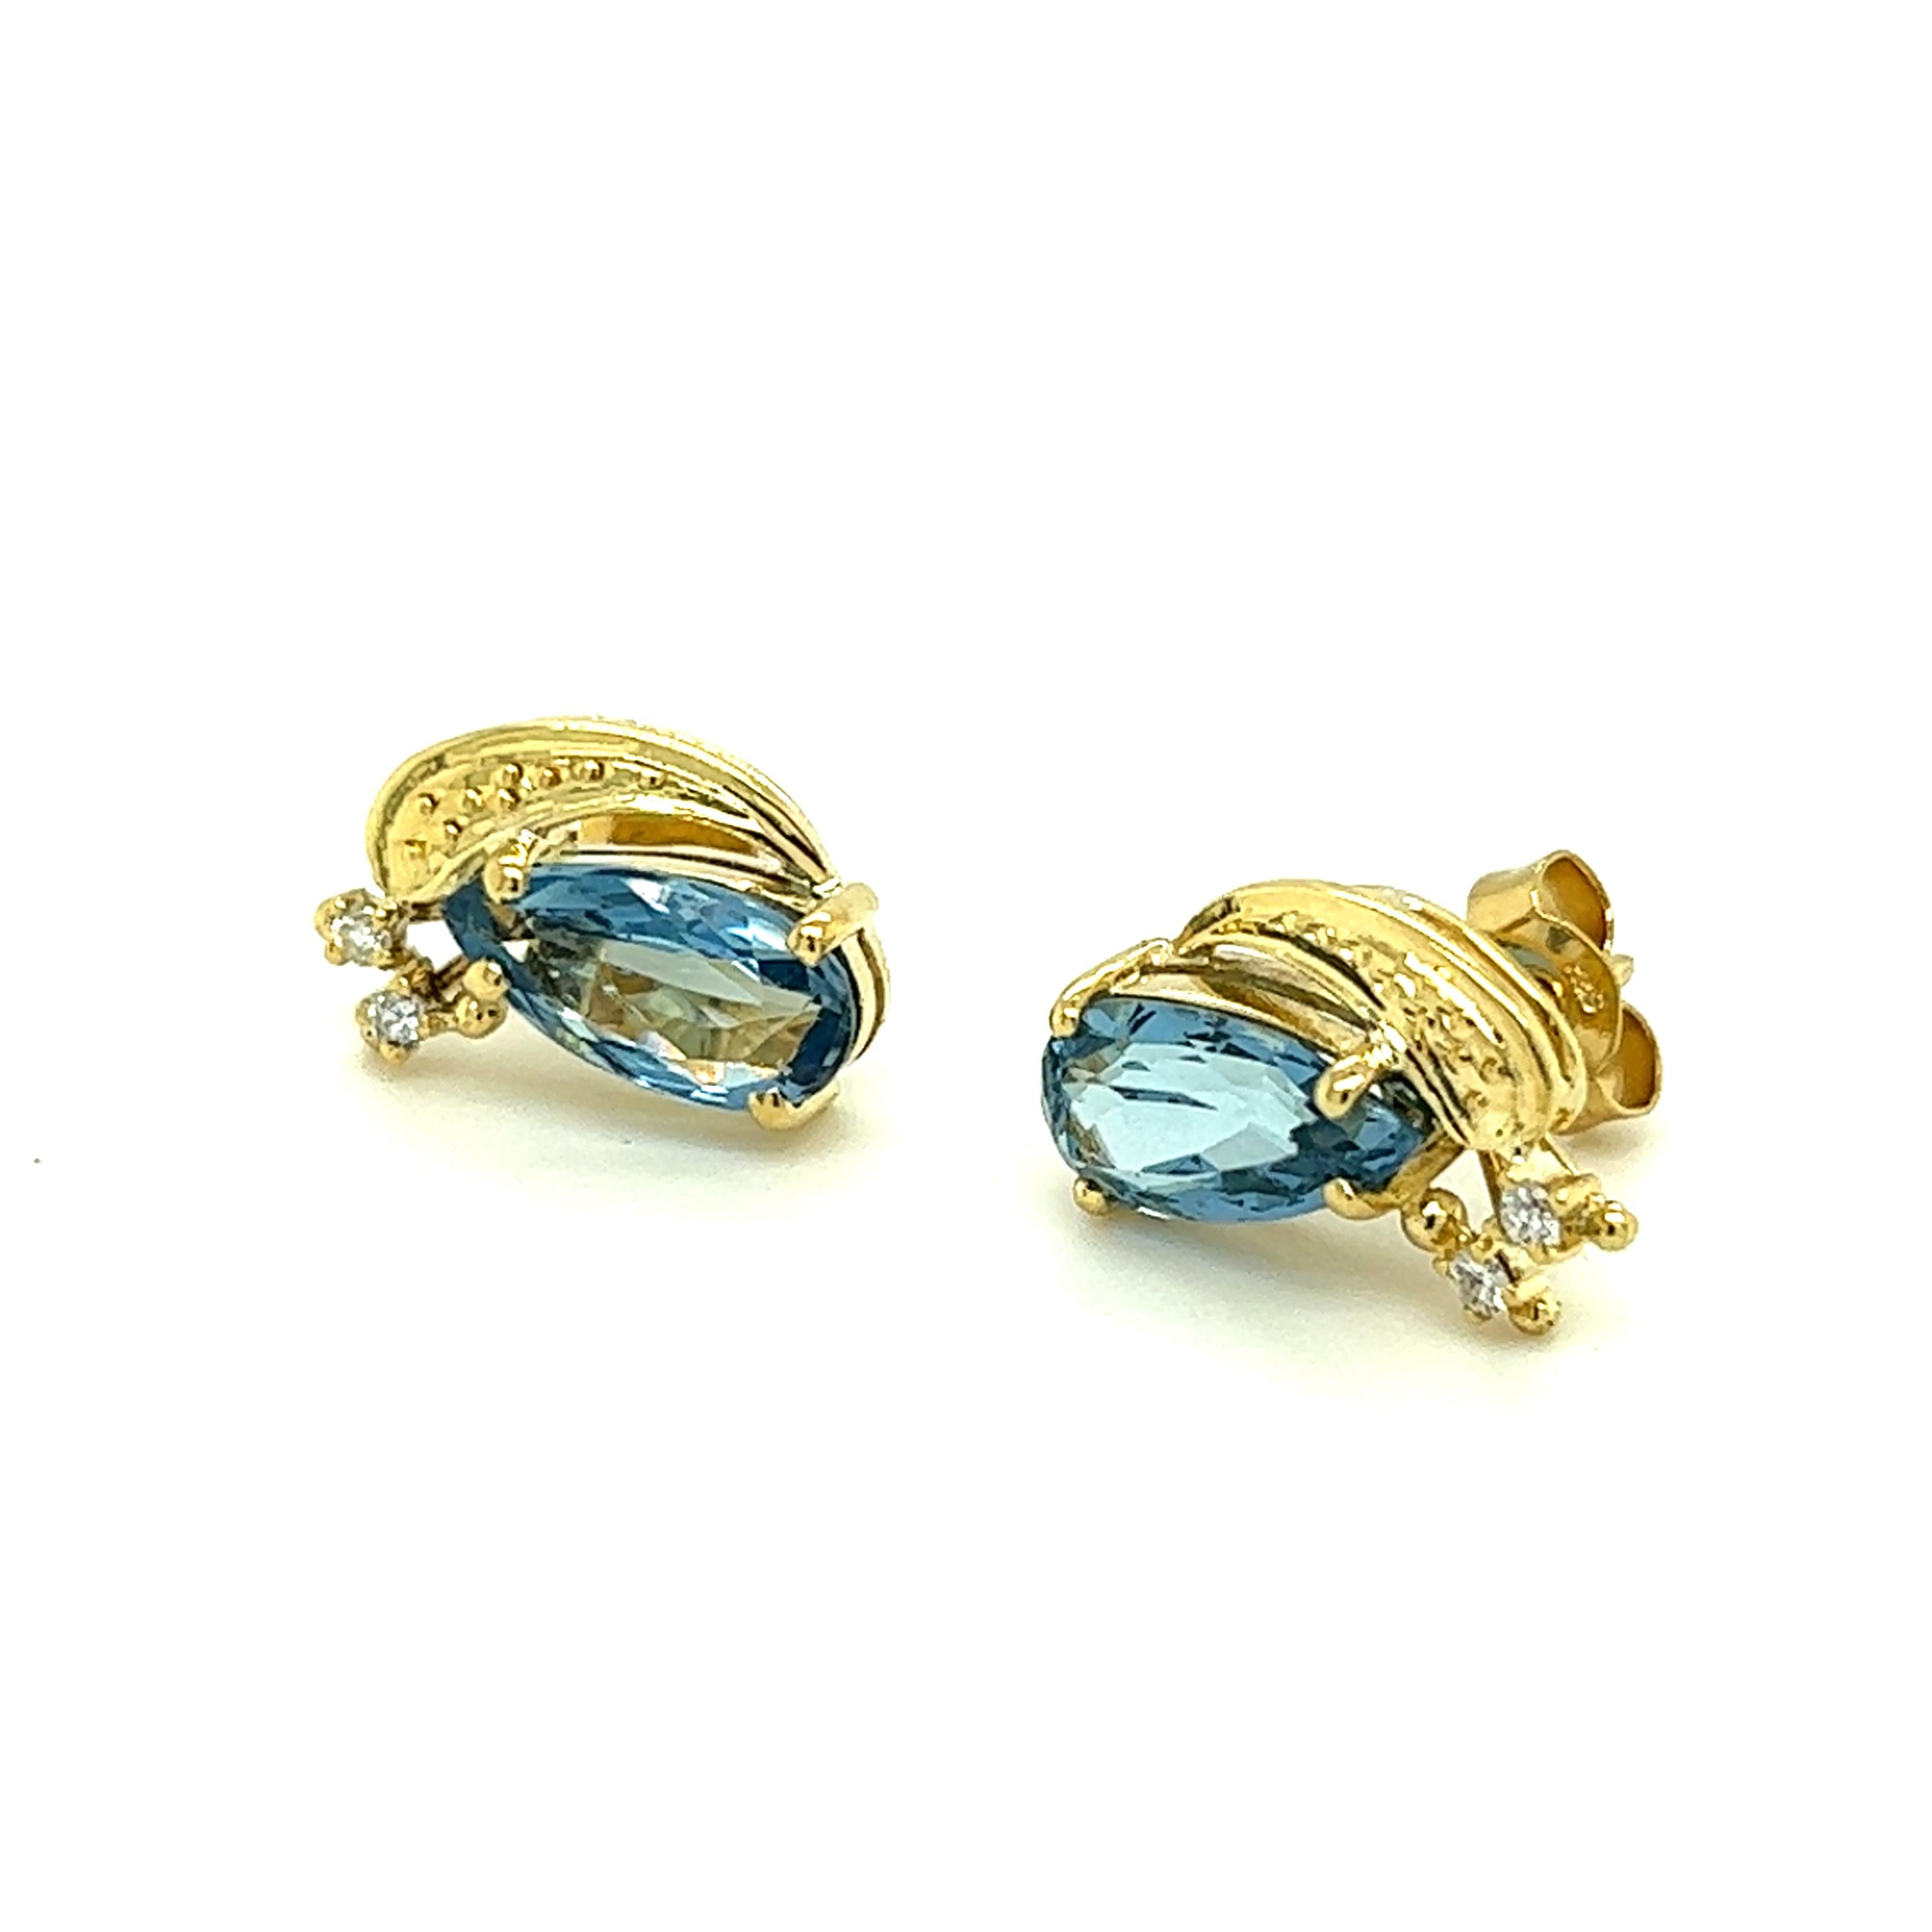 Pear Cut H. Stern Aquamarine and Diamond Earrings in 18K Yellow Gold